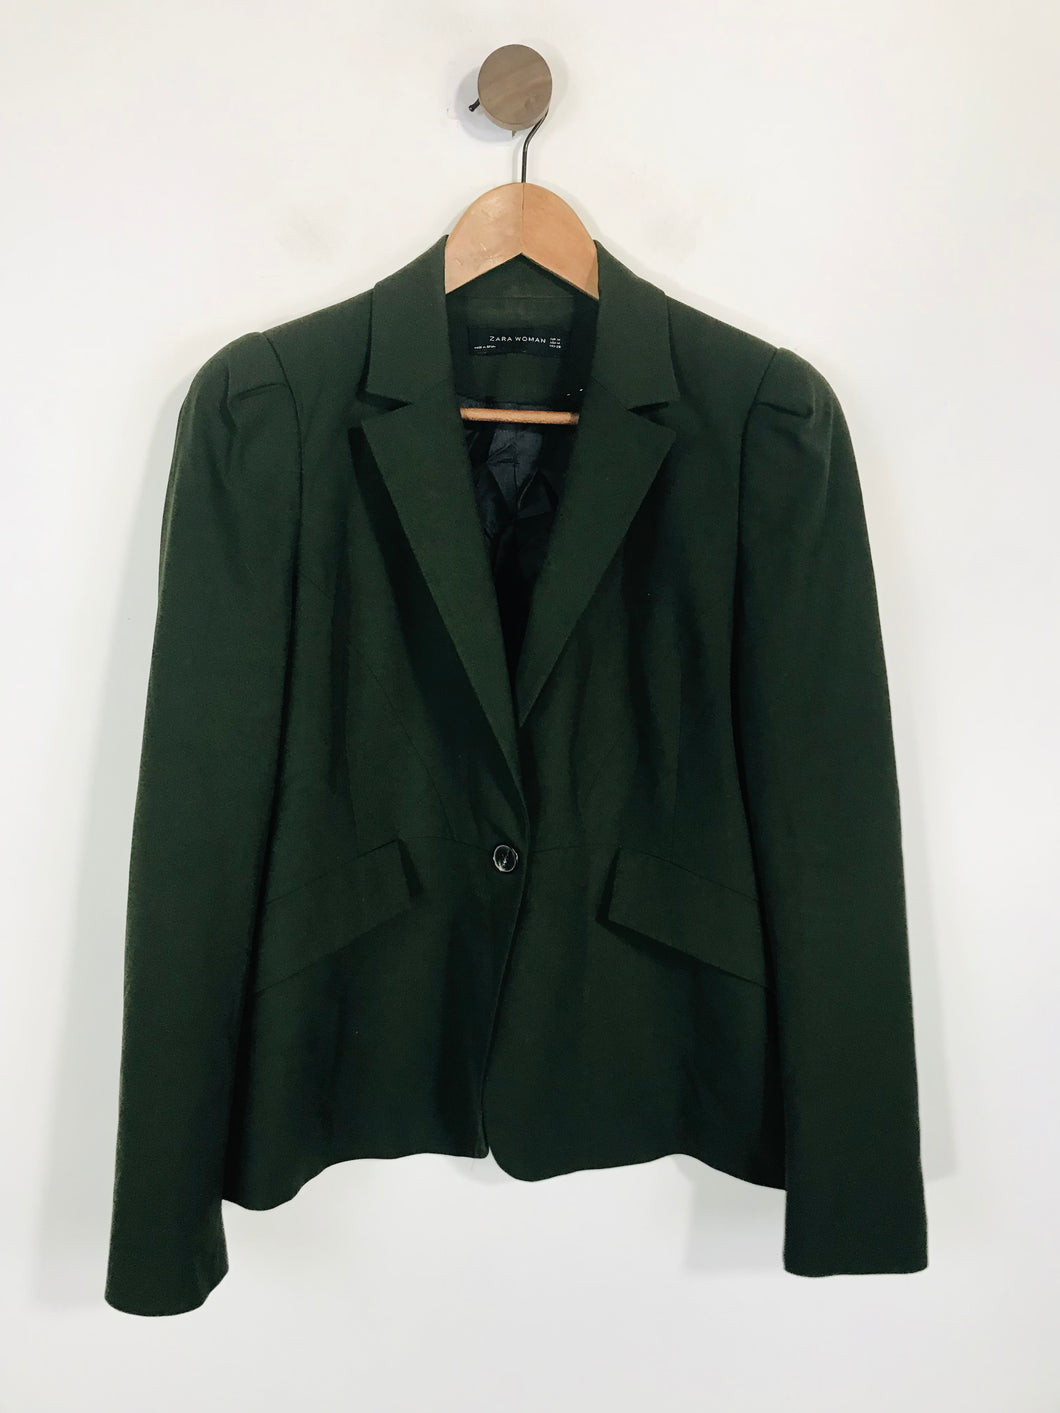 Zara Women's Smart Blazer Jacket | M UK10-12 | Green